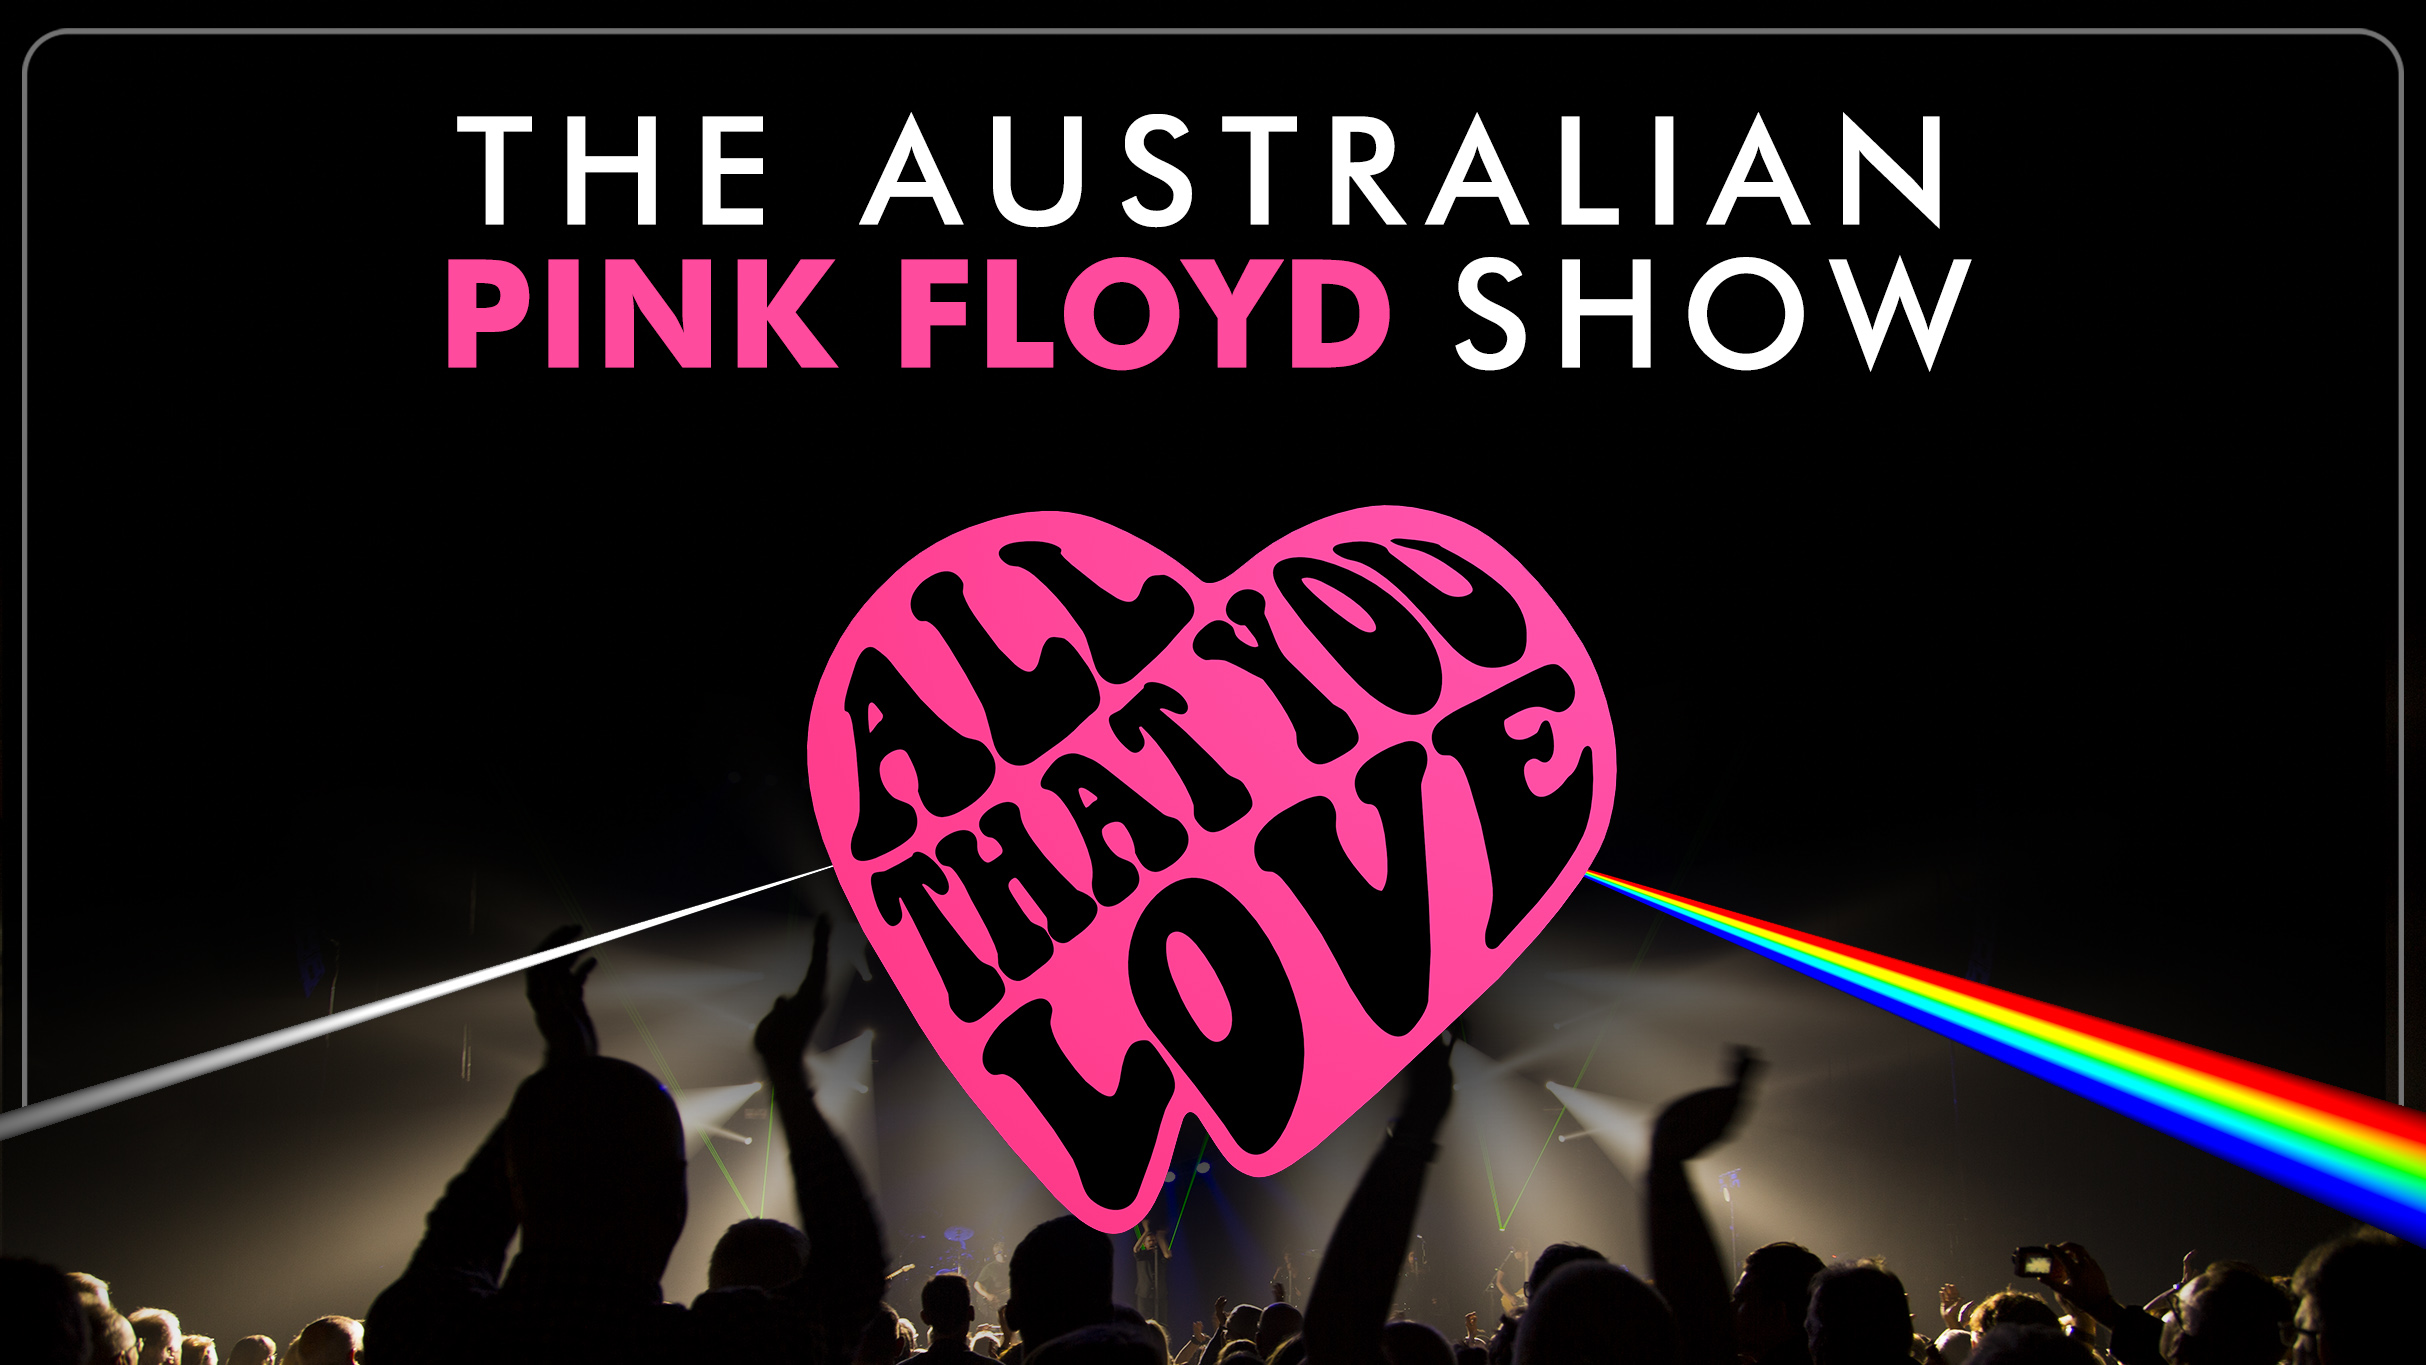 The Australian Pink Floyd Show - The 1st Class Traveling Set Tour